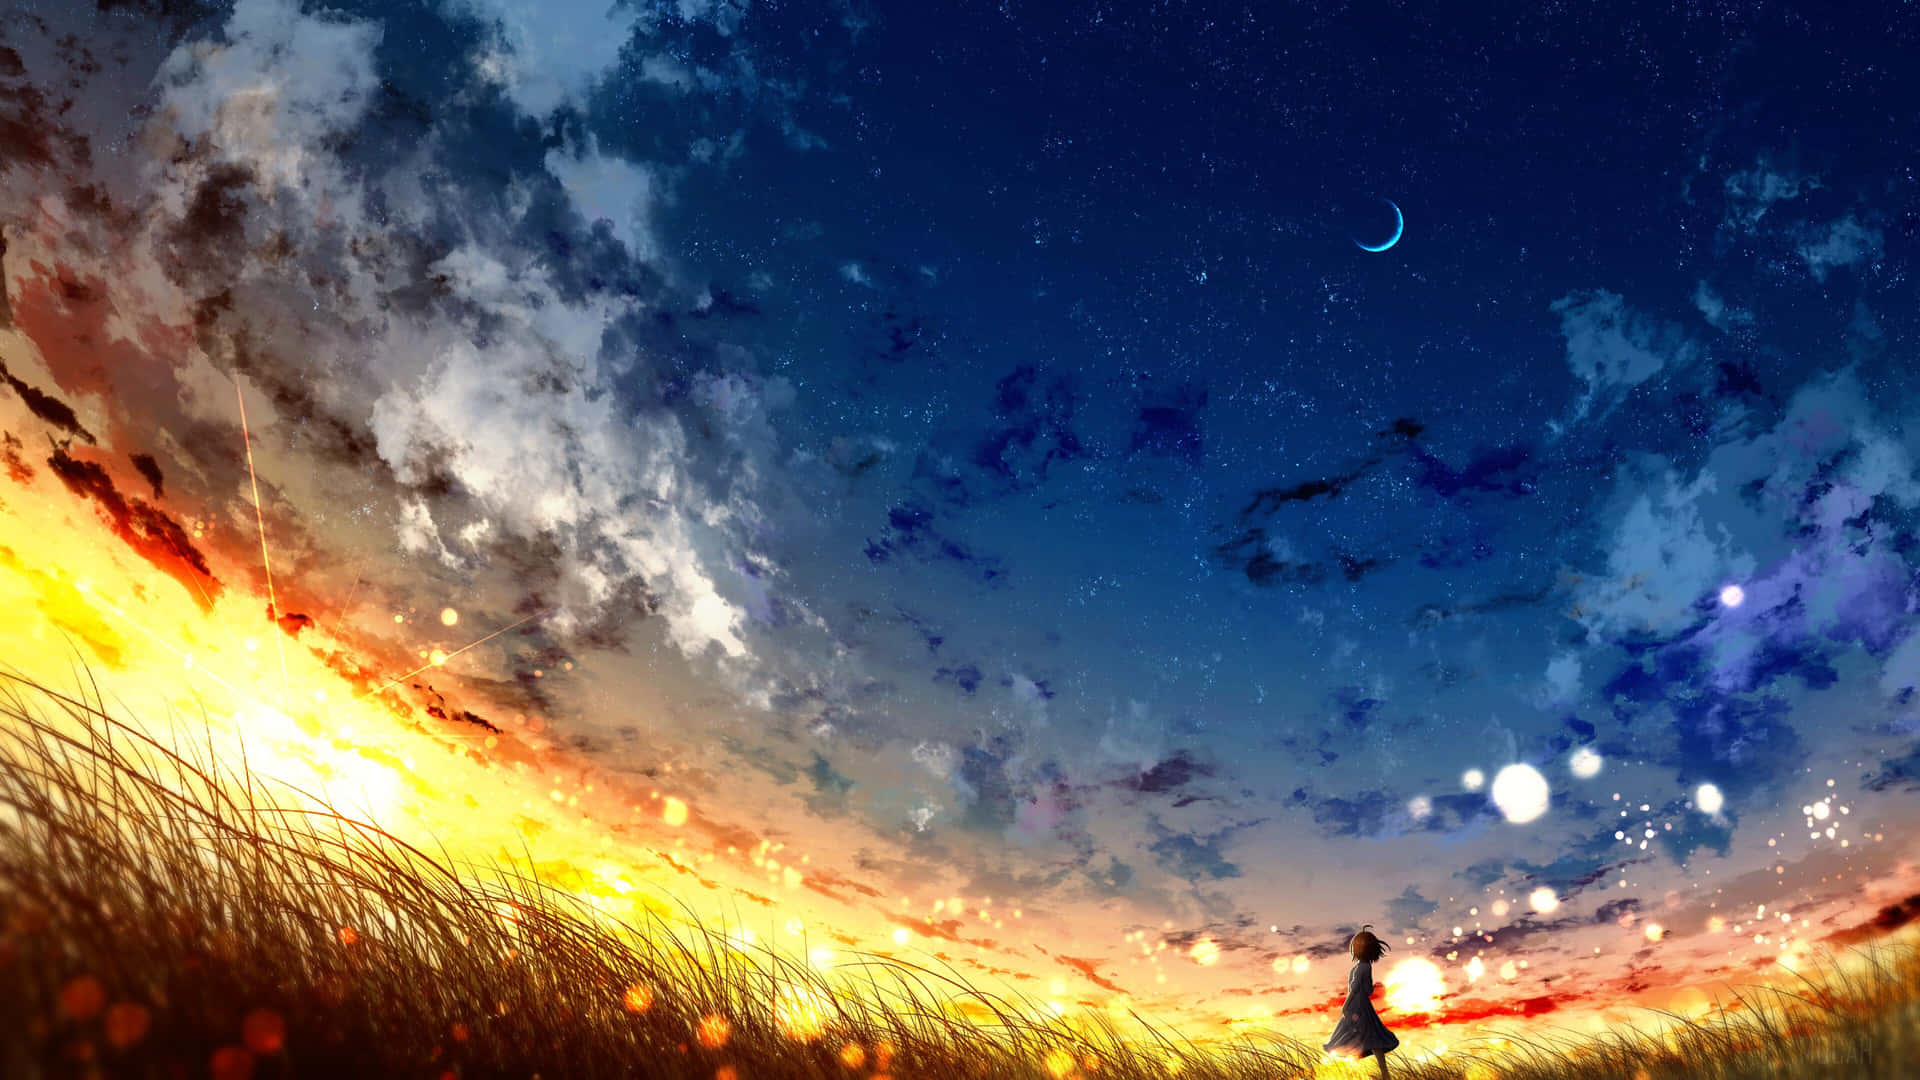 Explore the dusk sky of Anime Landscape